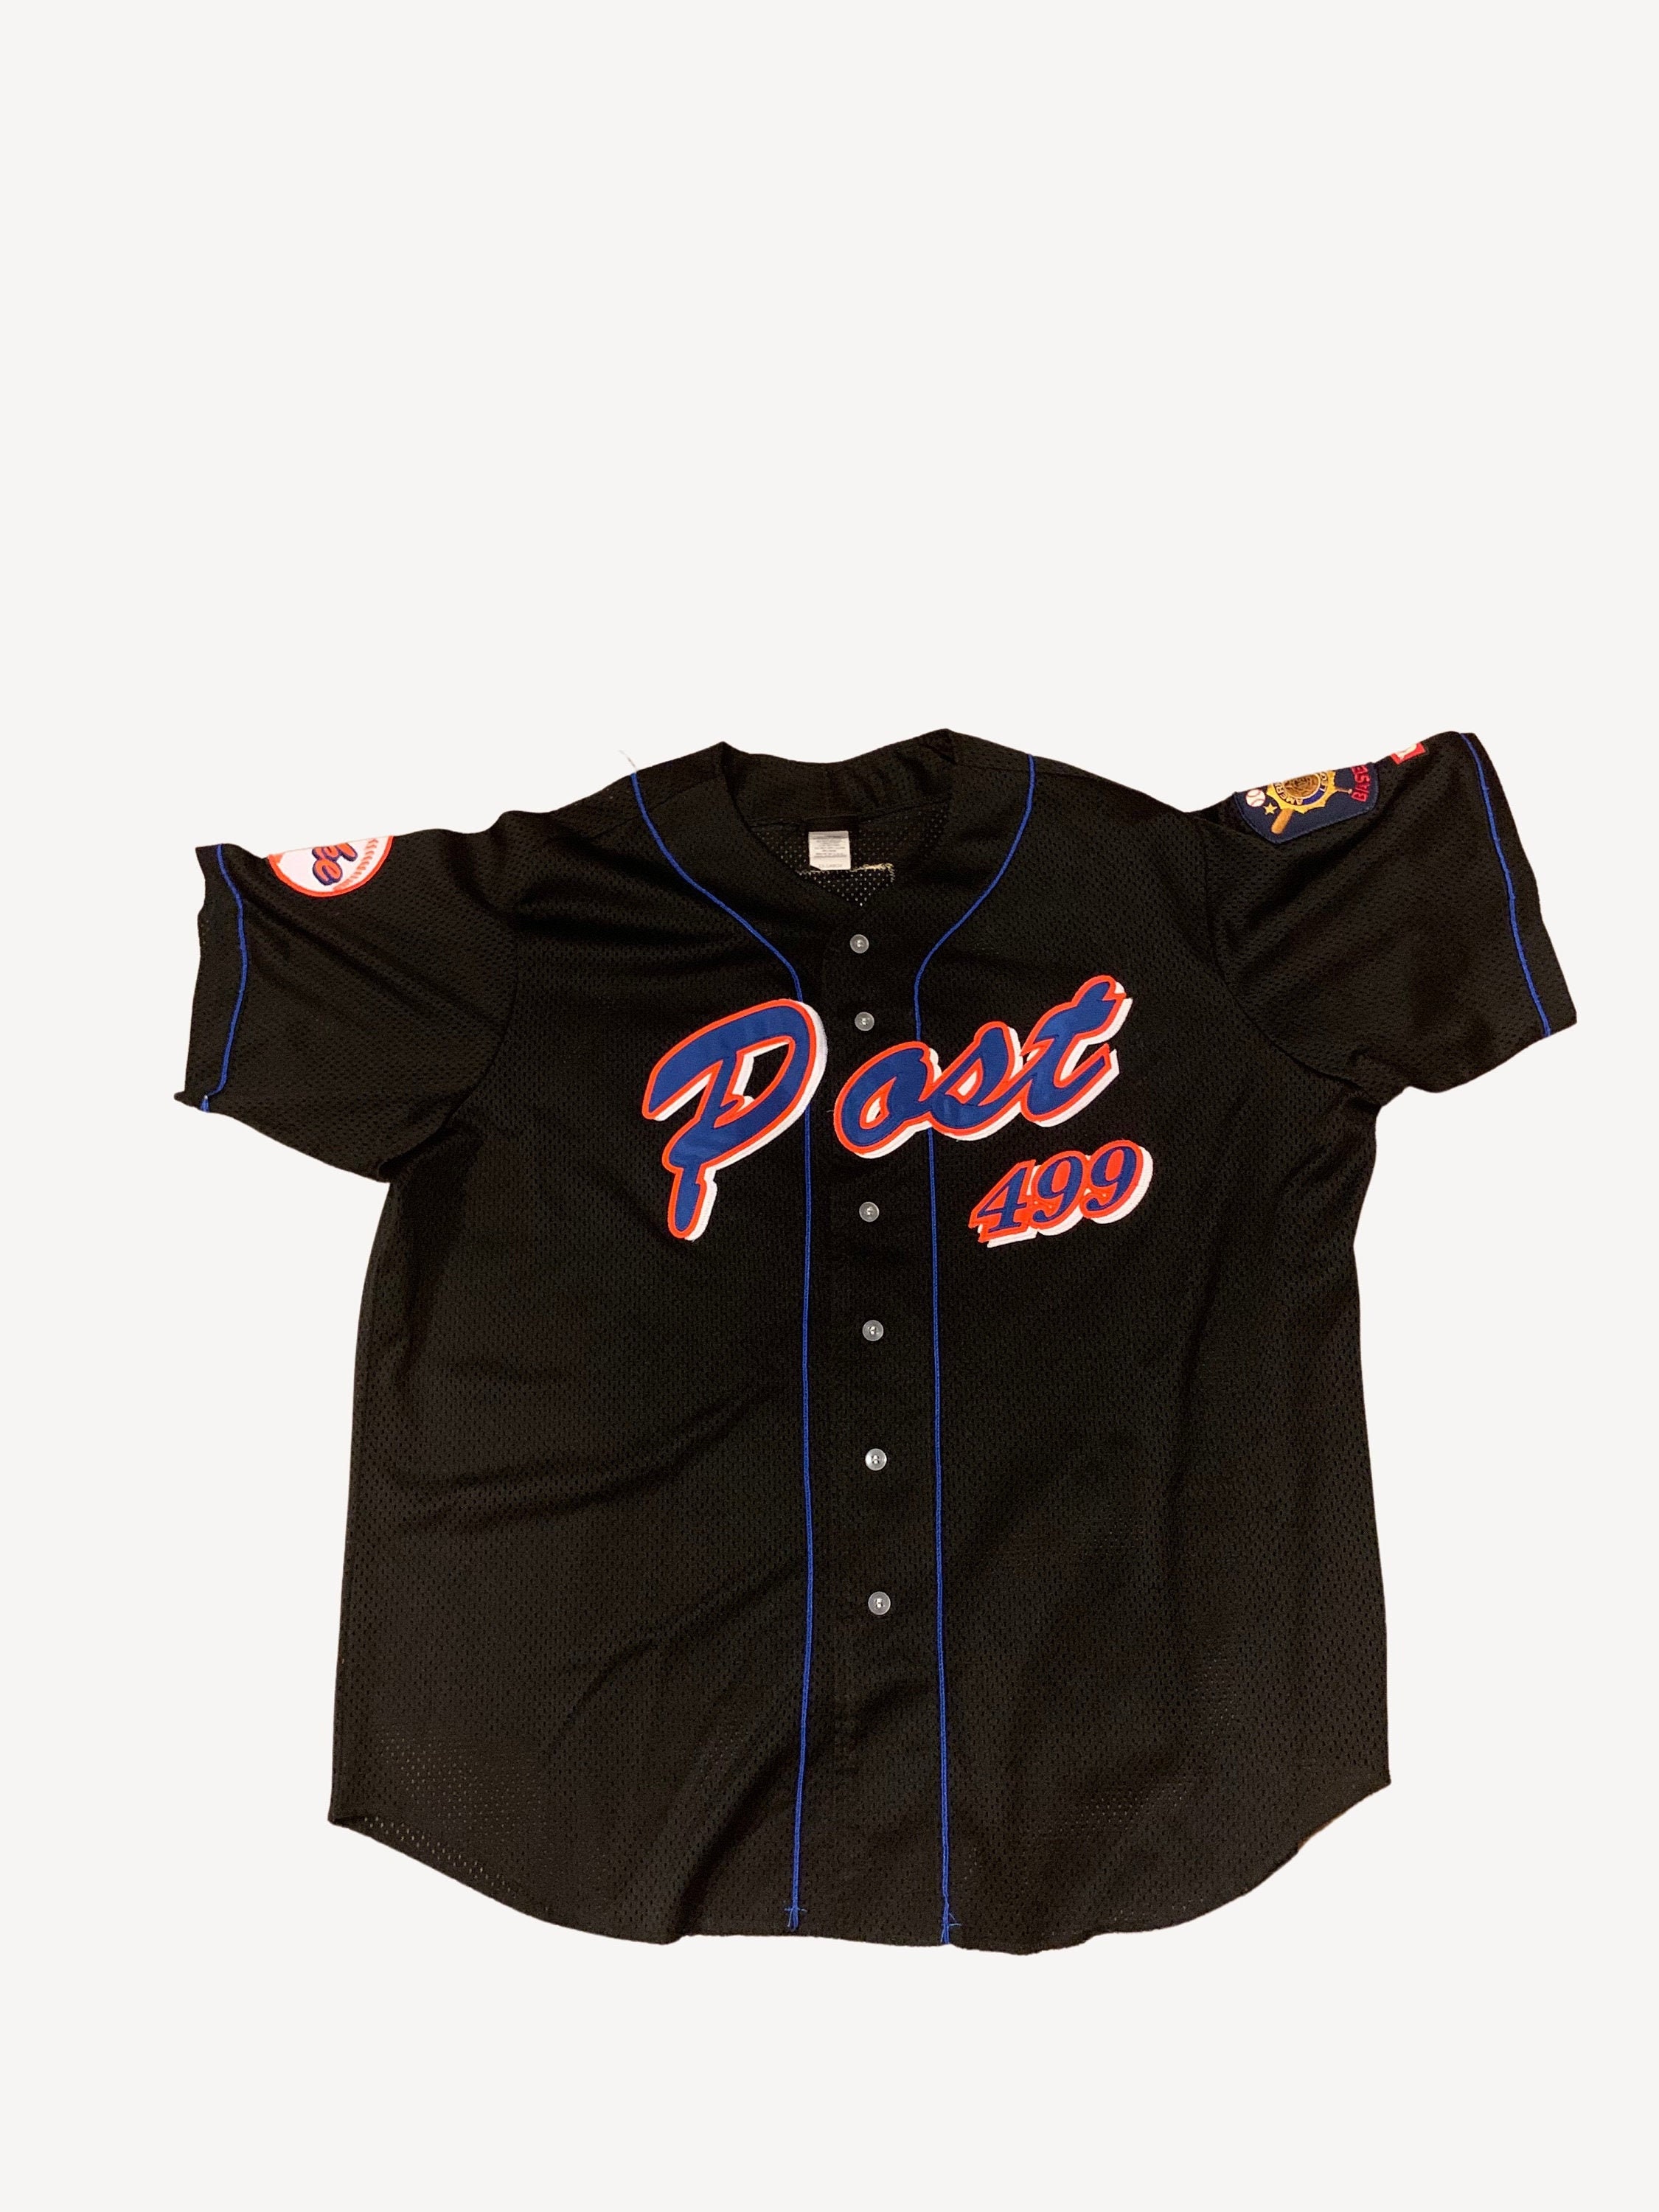 Mesh Baseball Practice Jersey - Button Up Mets Style Jersey, Post 499, American Legion, Minor League, American Baseball Jersey, Unisex